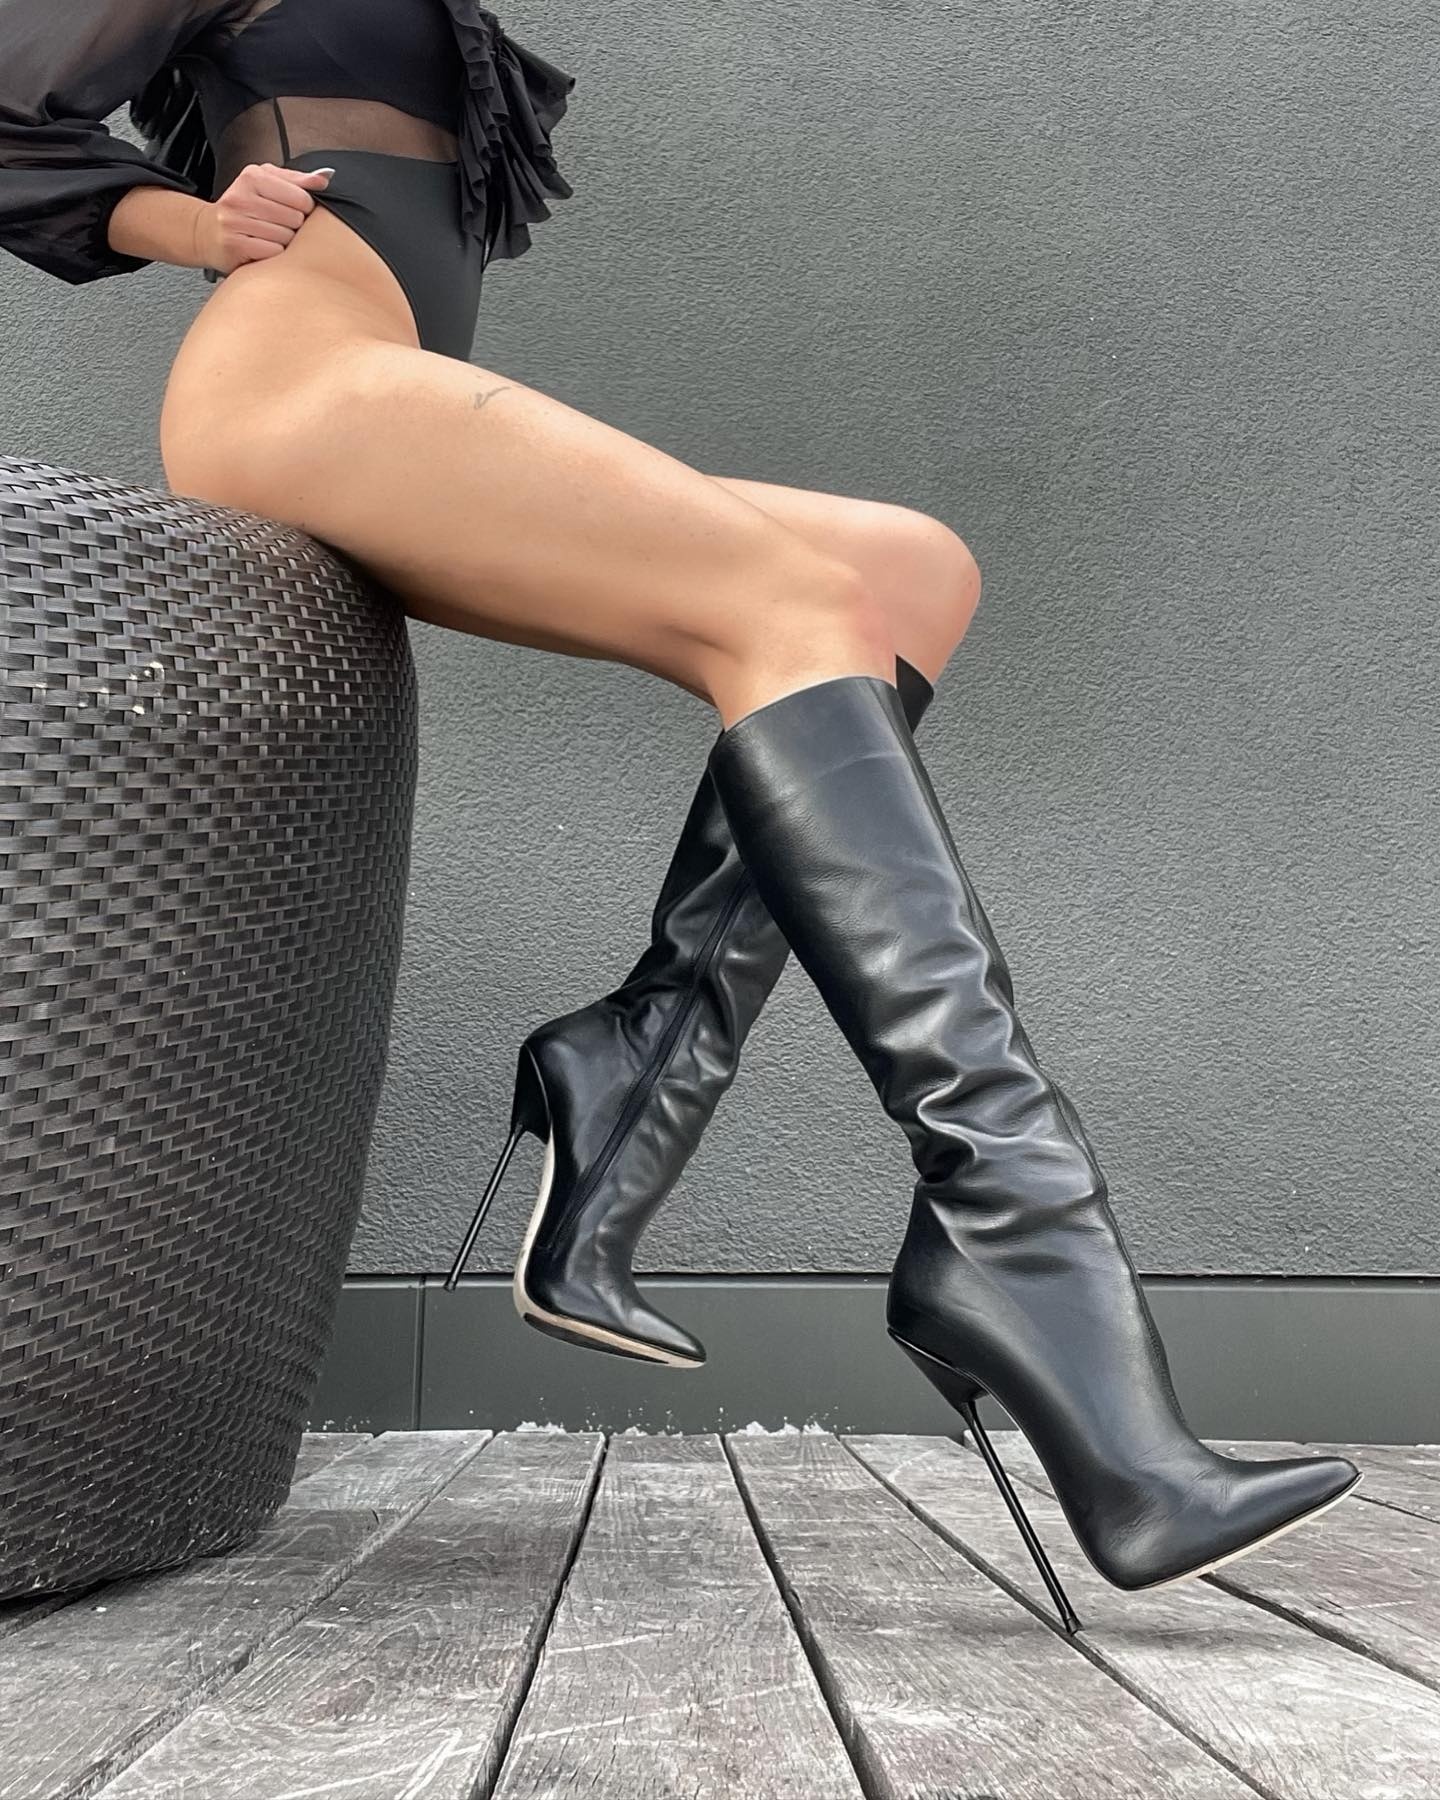 Gabriela in the Venus knee boots - Italian High Heels by Sanctum Shoes